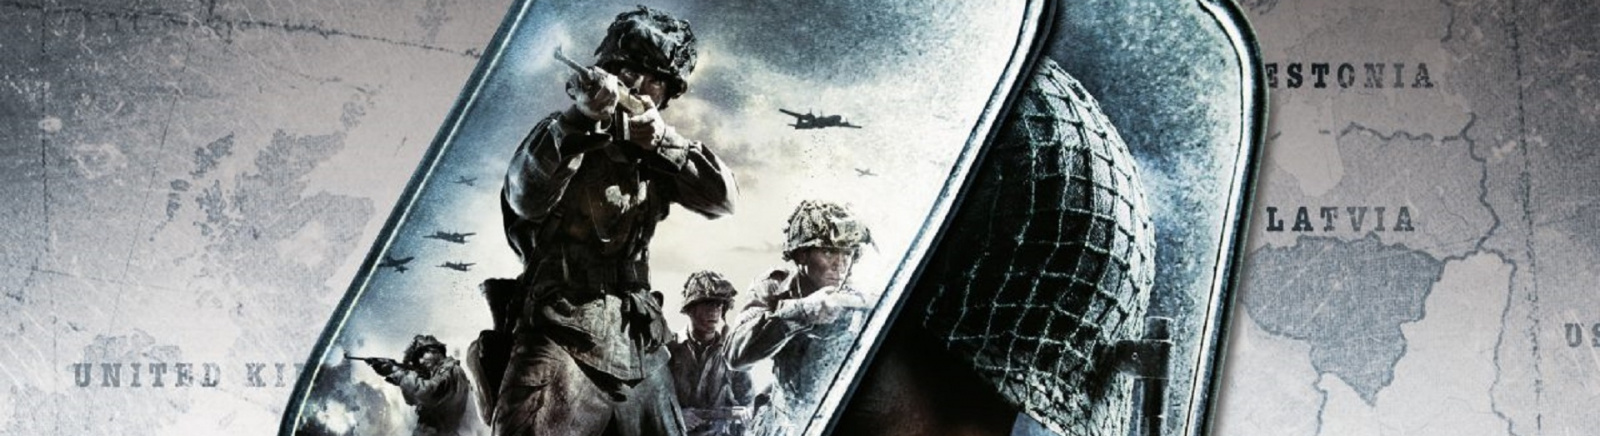 Дата выхода Medal of Honor: European Assault (Medal of Honor: Europa Kyoushuu)  на PS2, Xbox и GameCube в России и во всем мире